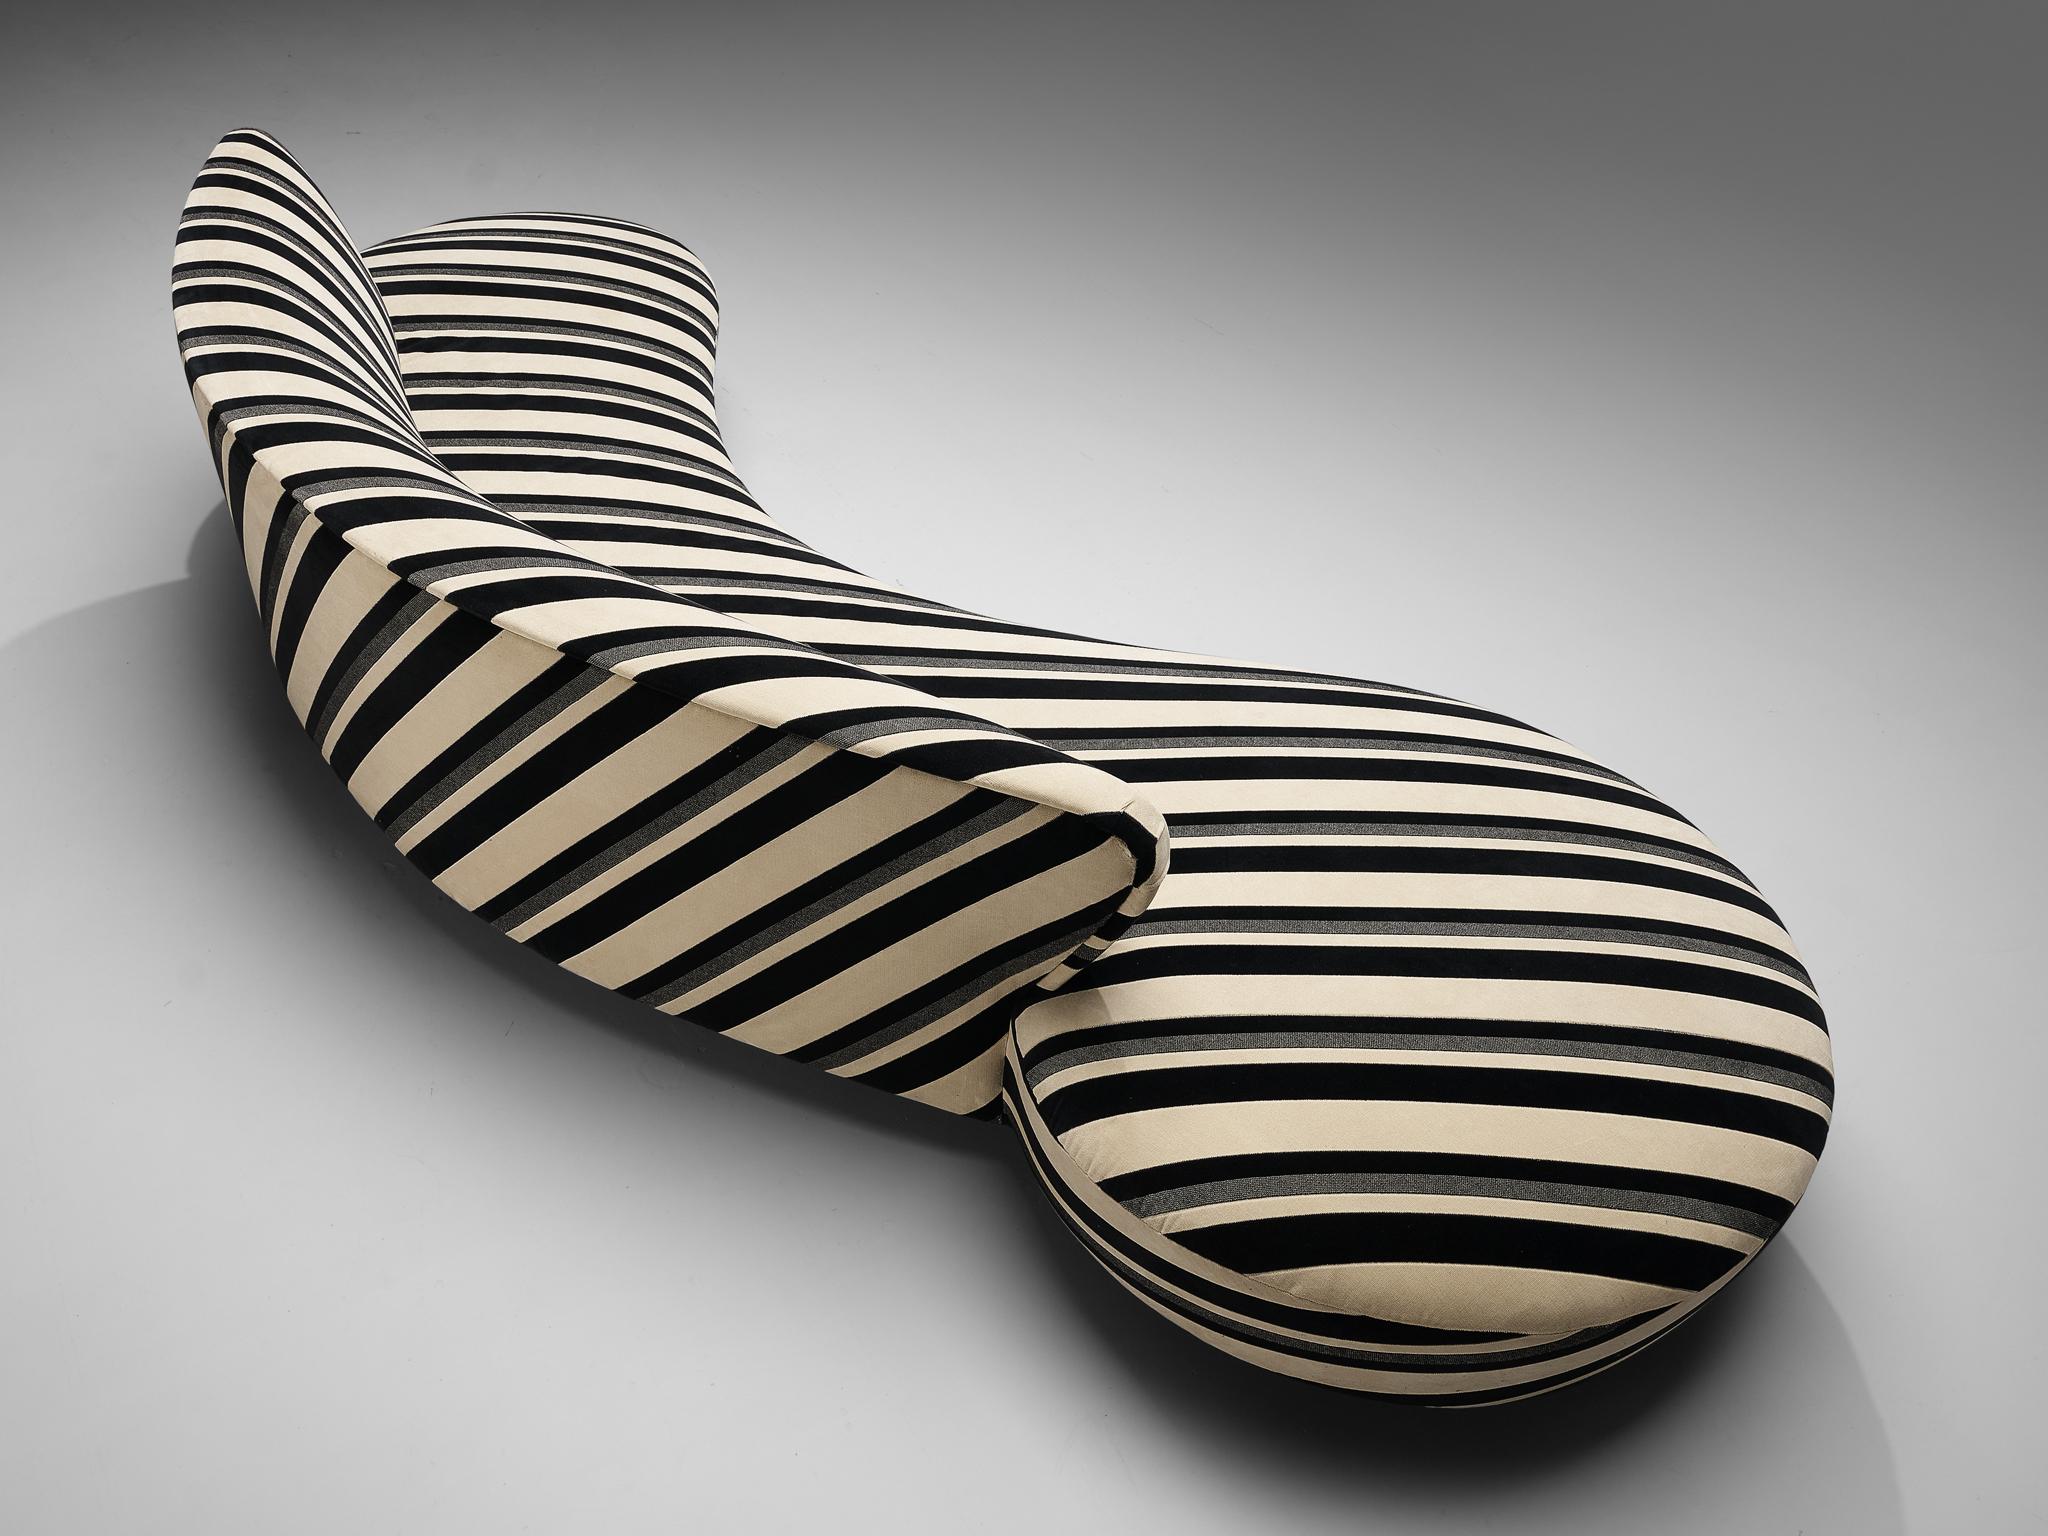 Iconic Vladimir Kagan 'Serpentine' Sofa in Striped Upholstery 1